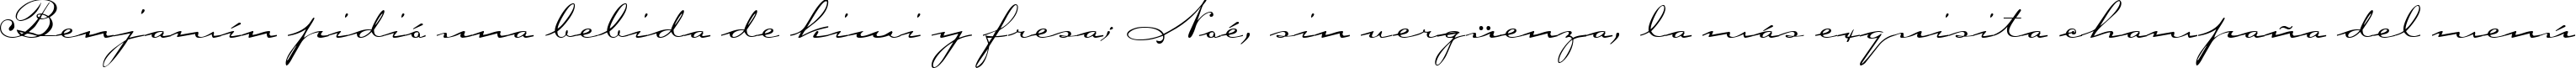 Пример написания шрифтом Carpenter Script текста на испанском